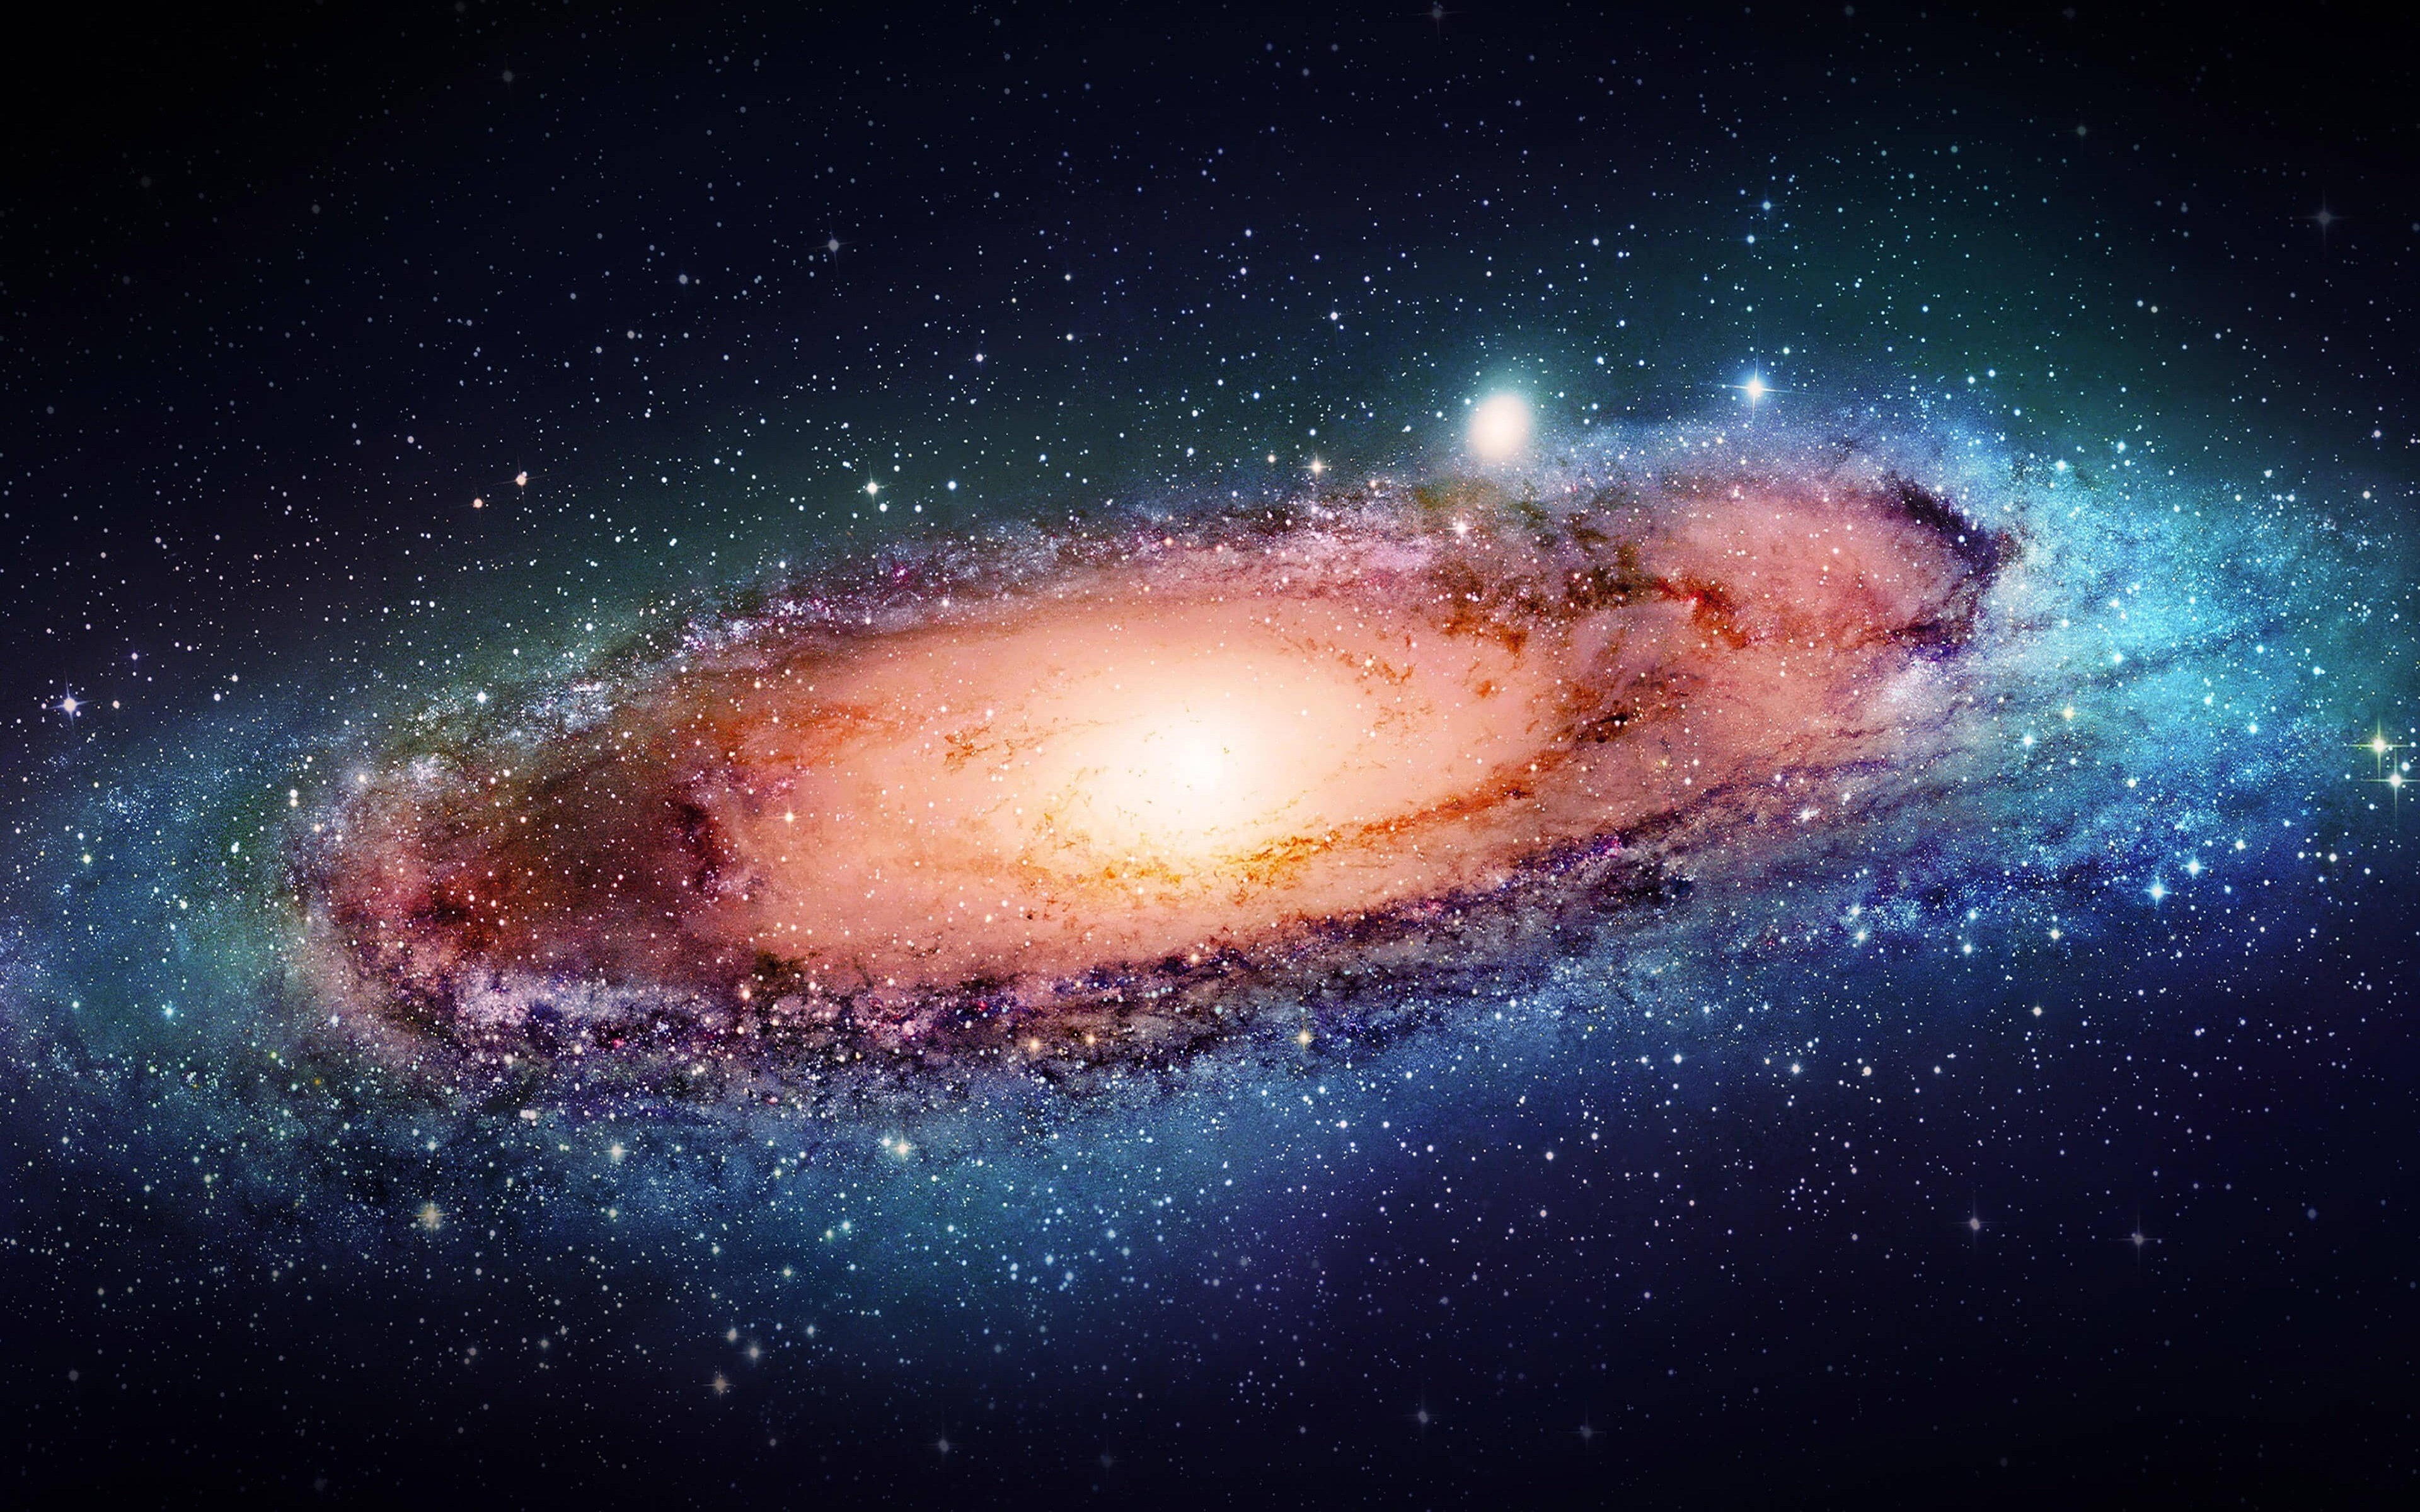 Milky Way Galaxy 3840 X 2400 4k Retina Display Hd Wallpaper Hdwallpapers Site